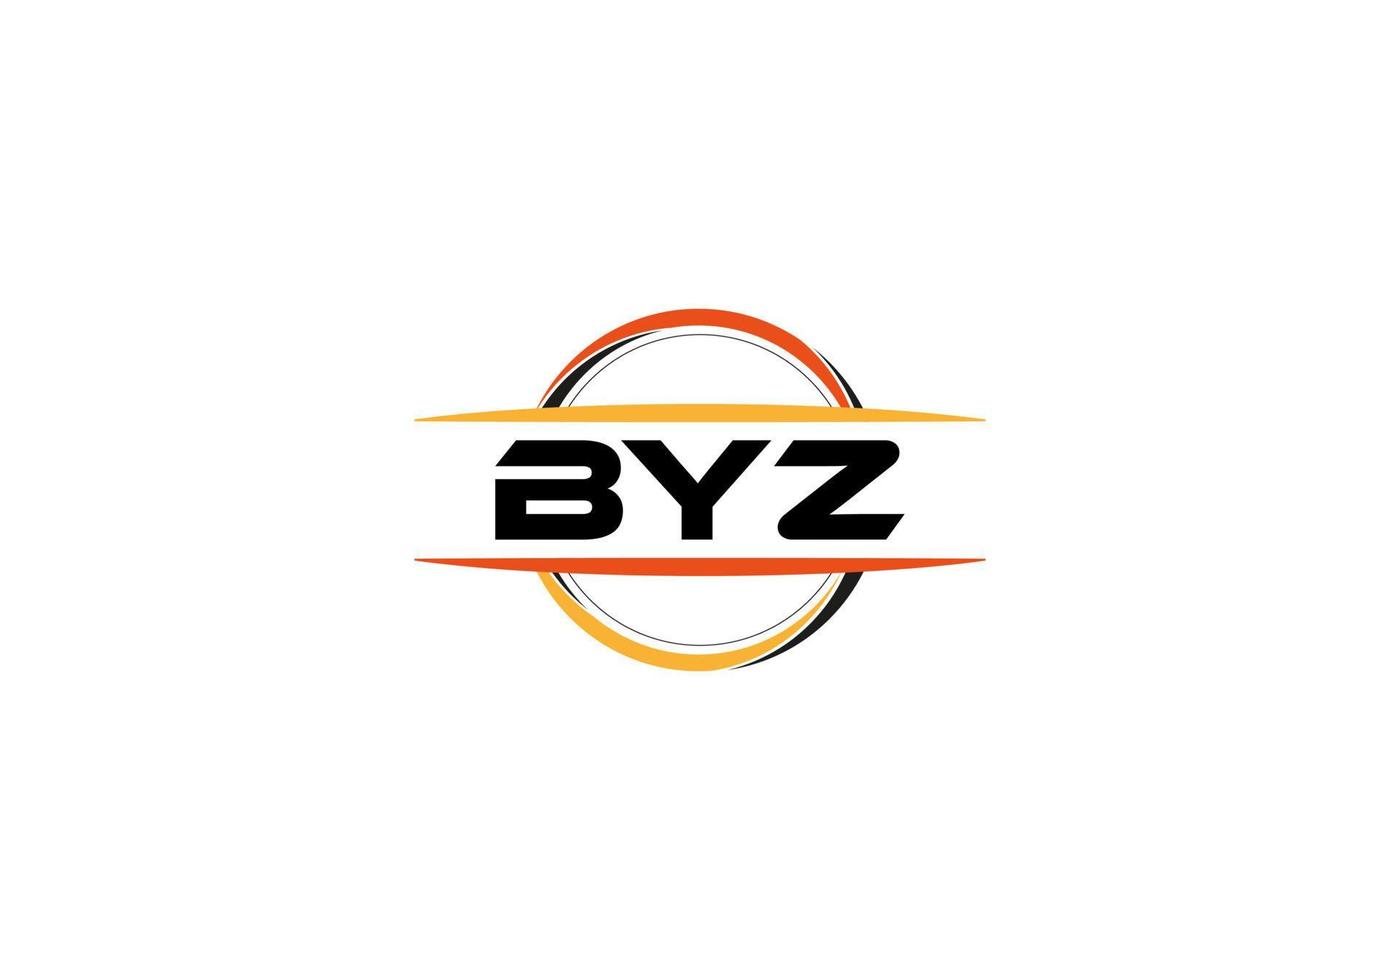 BYZ letter royalty mandala shape logo. BYZ brush art logo. BYZ logo for a company, business, and commercial use. vector